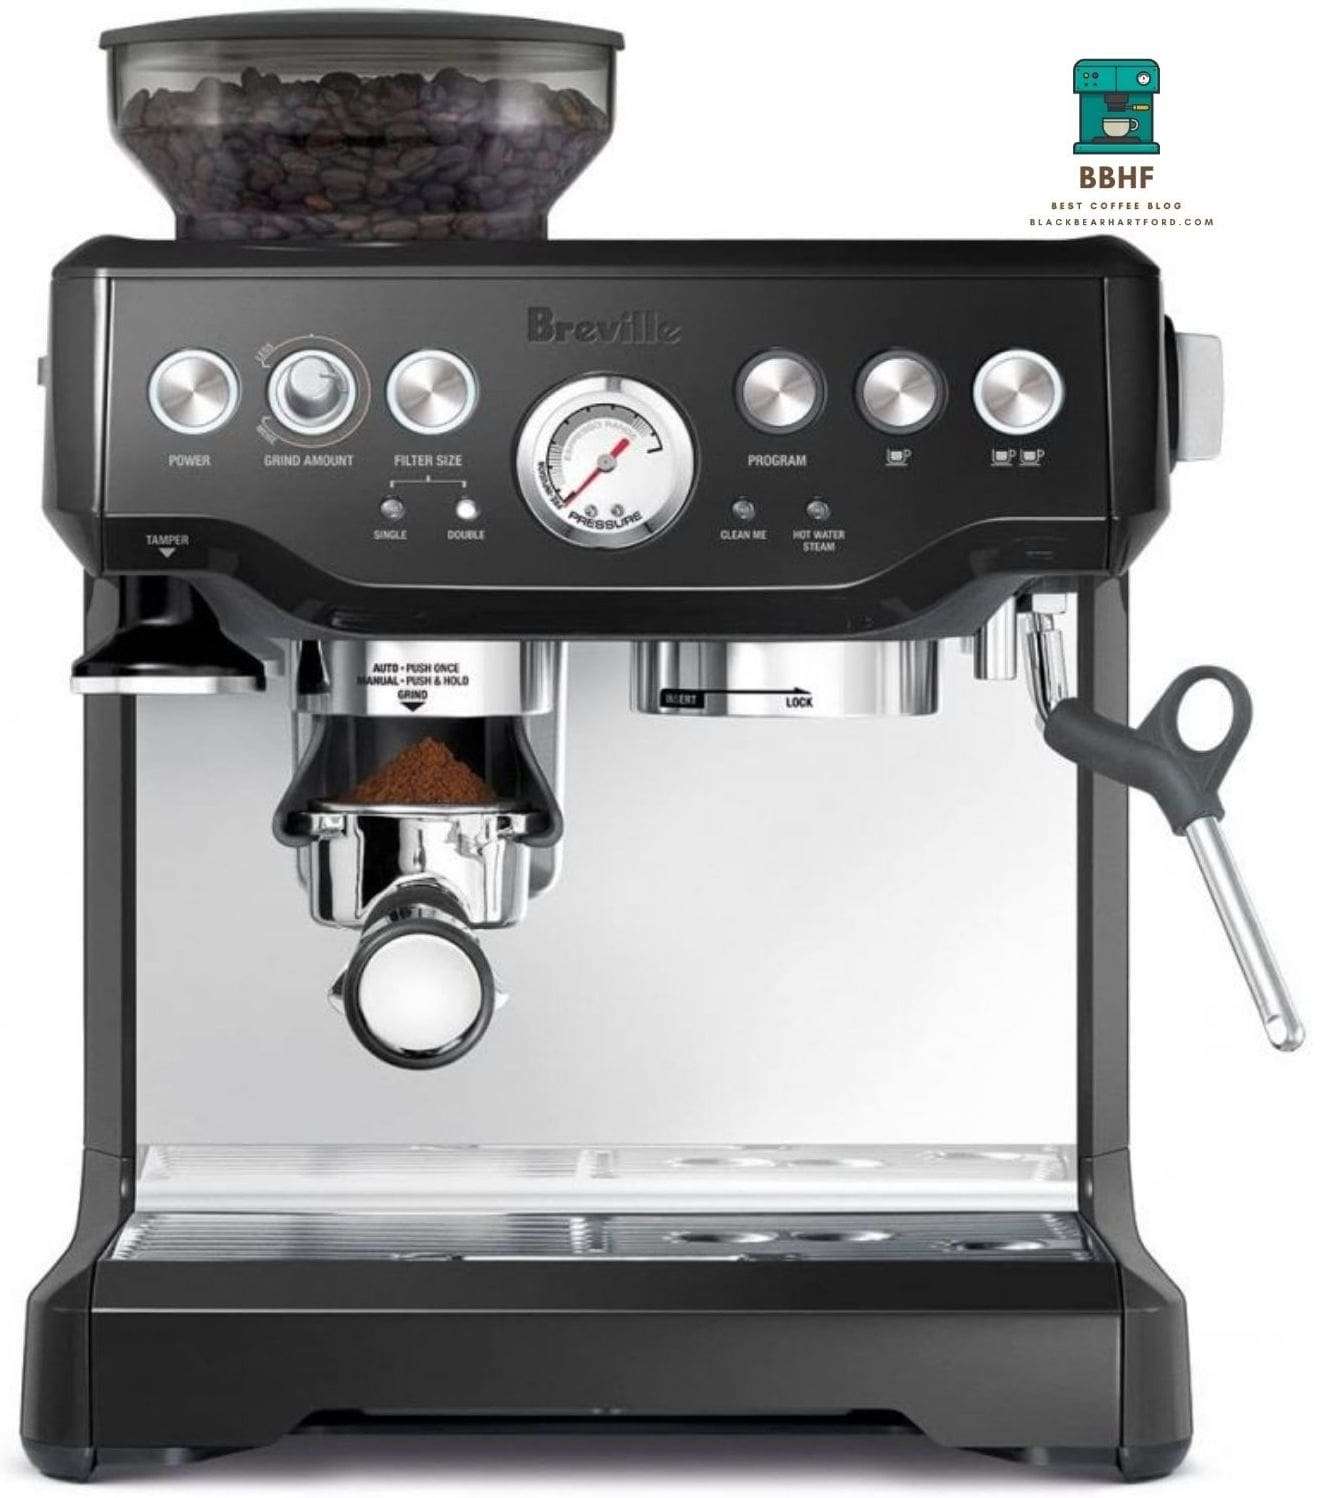 Best Espresso Machine For Small Business to buy in 2021 âï¸?